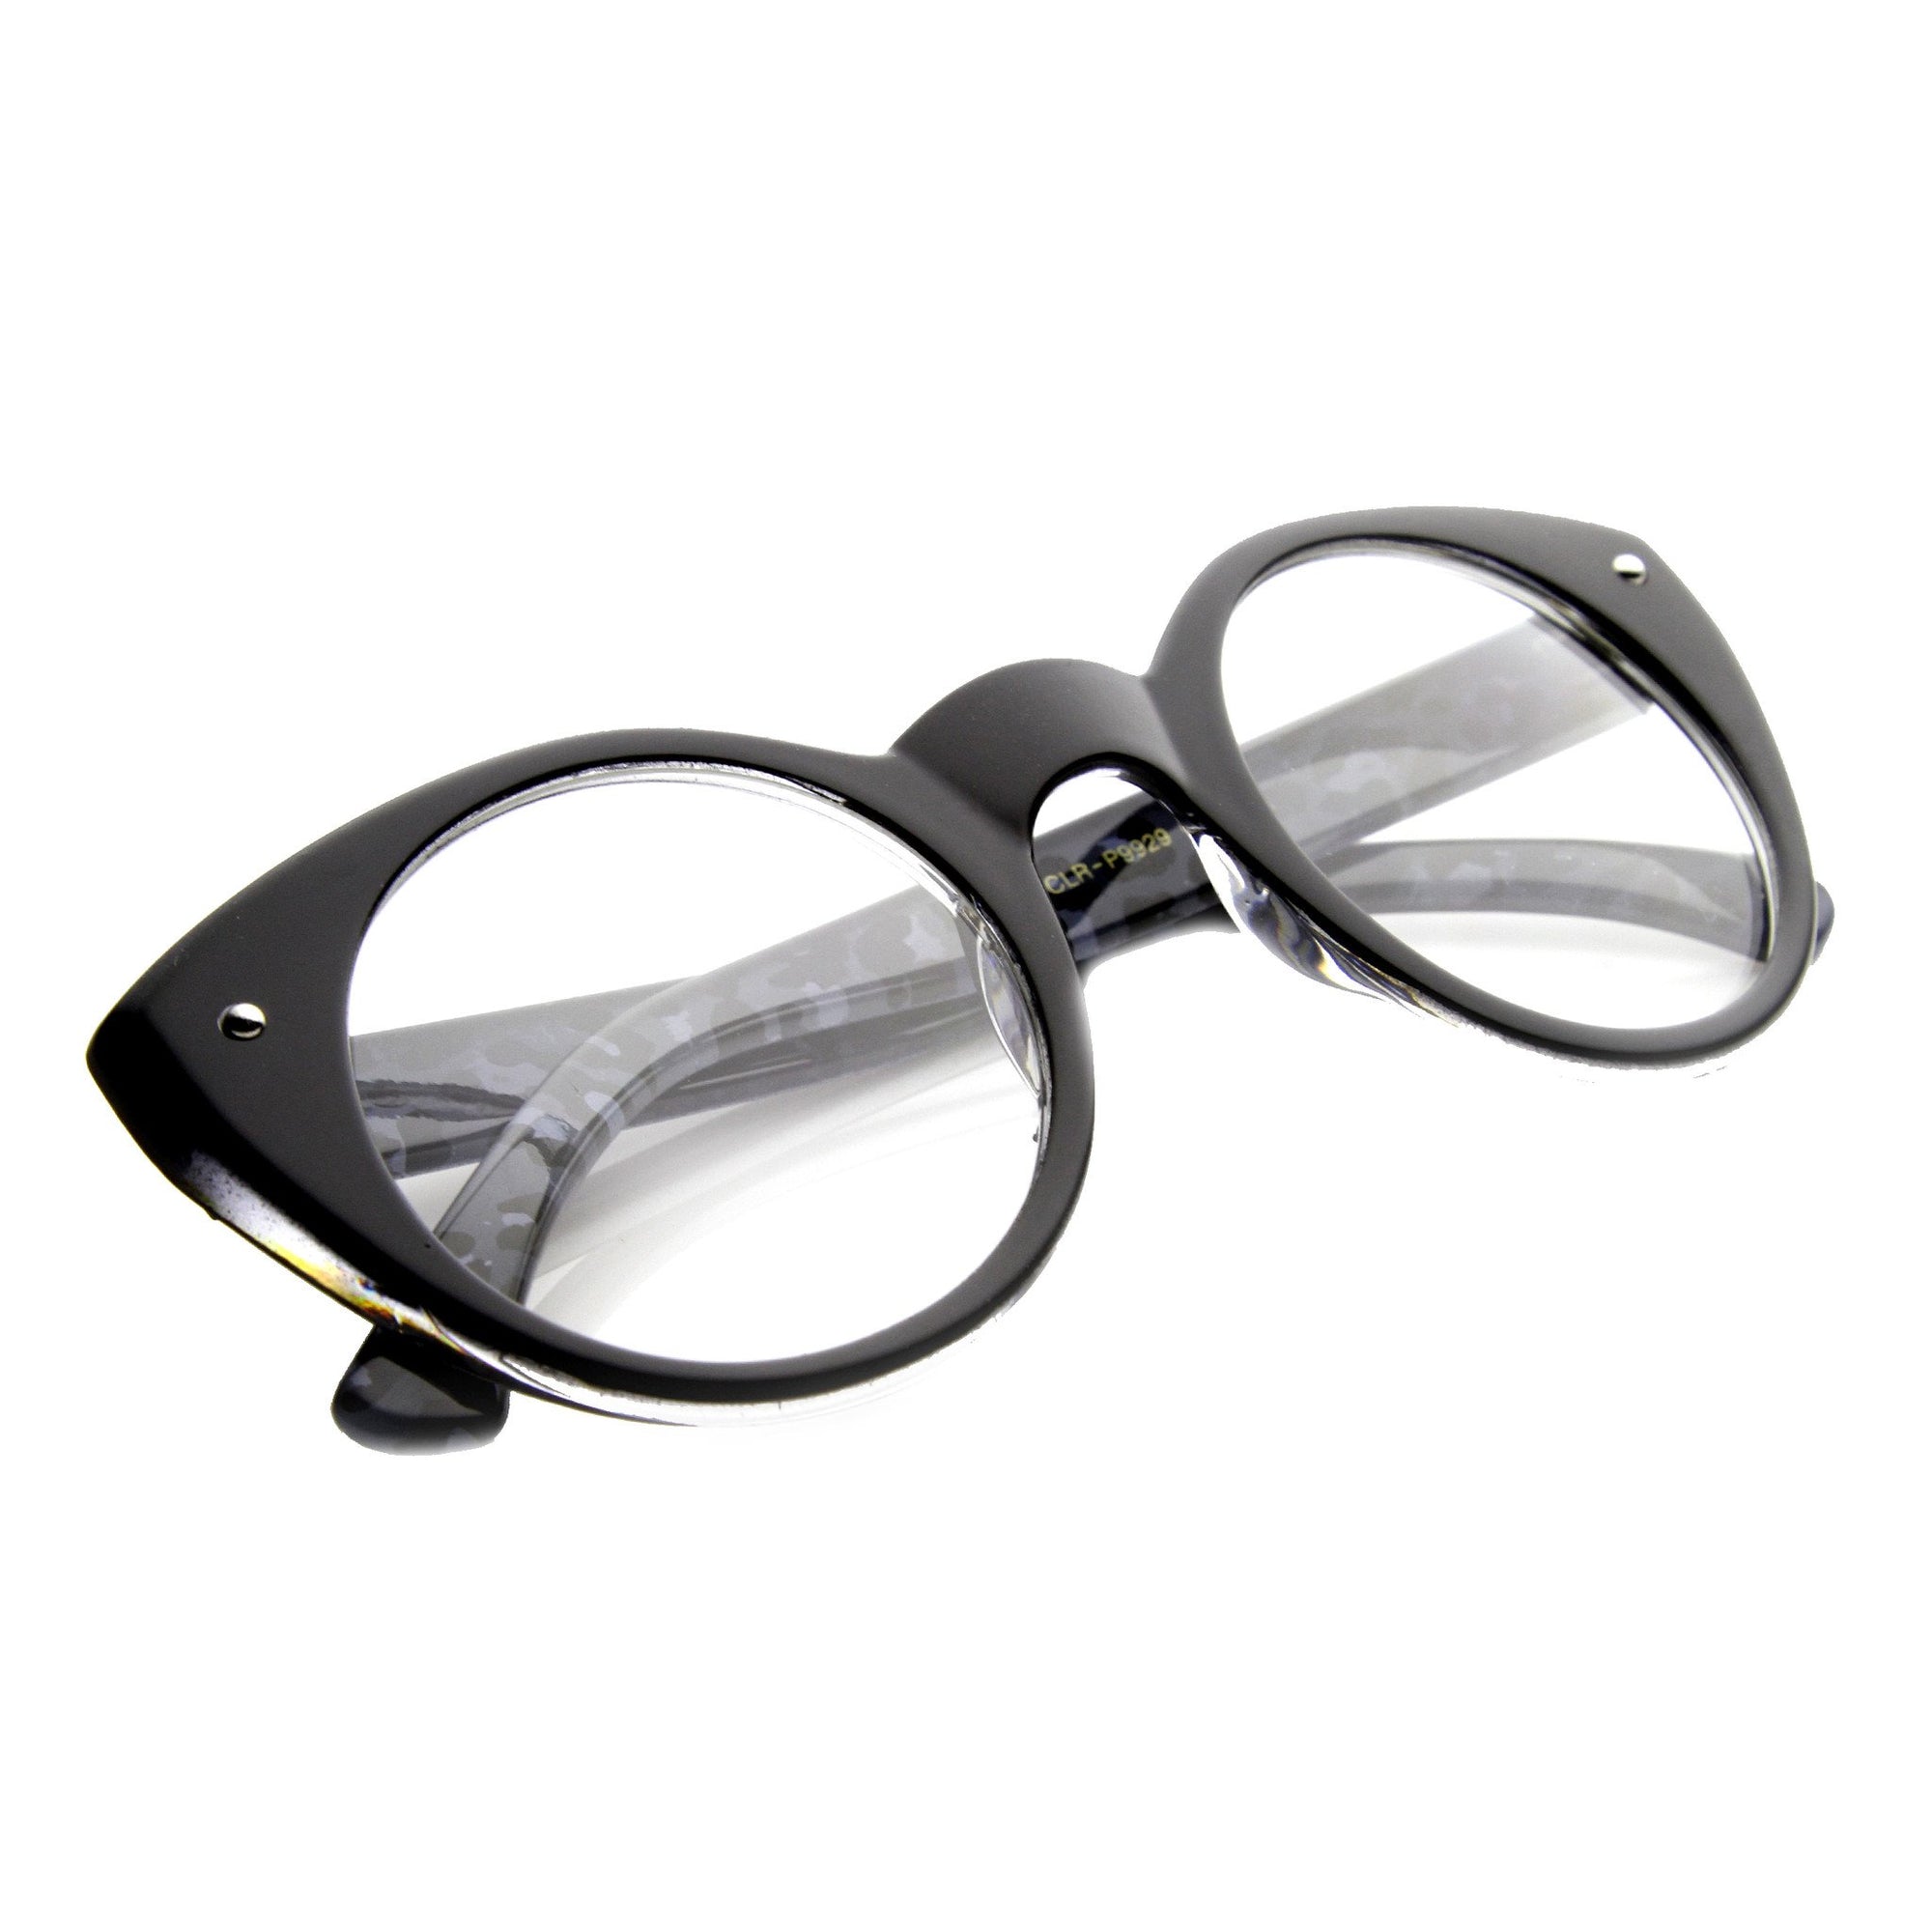 Vintage 1950's Womens Cat Eye Clear Lens Glasses - zeroUV